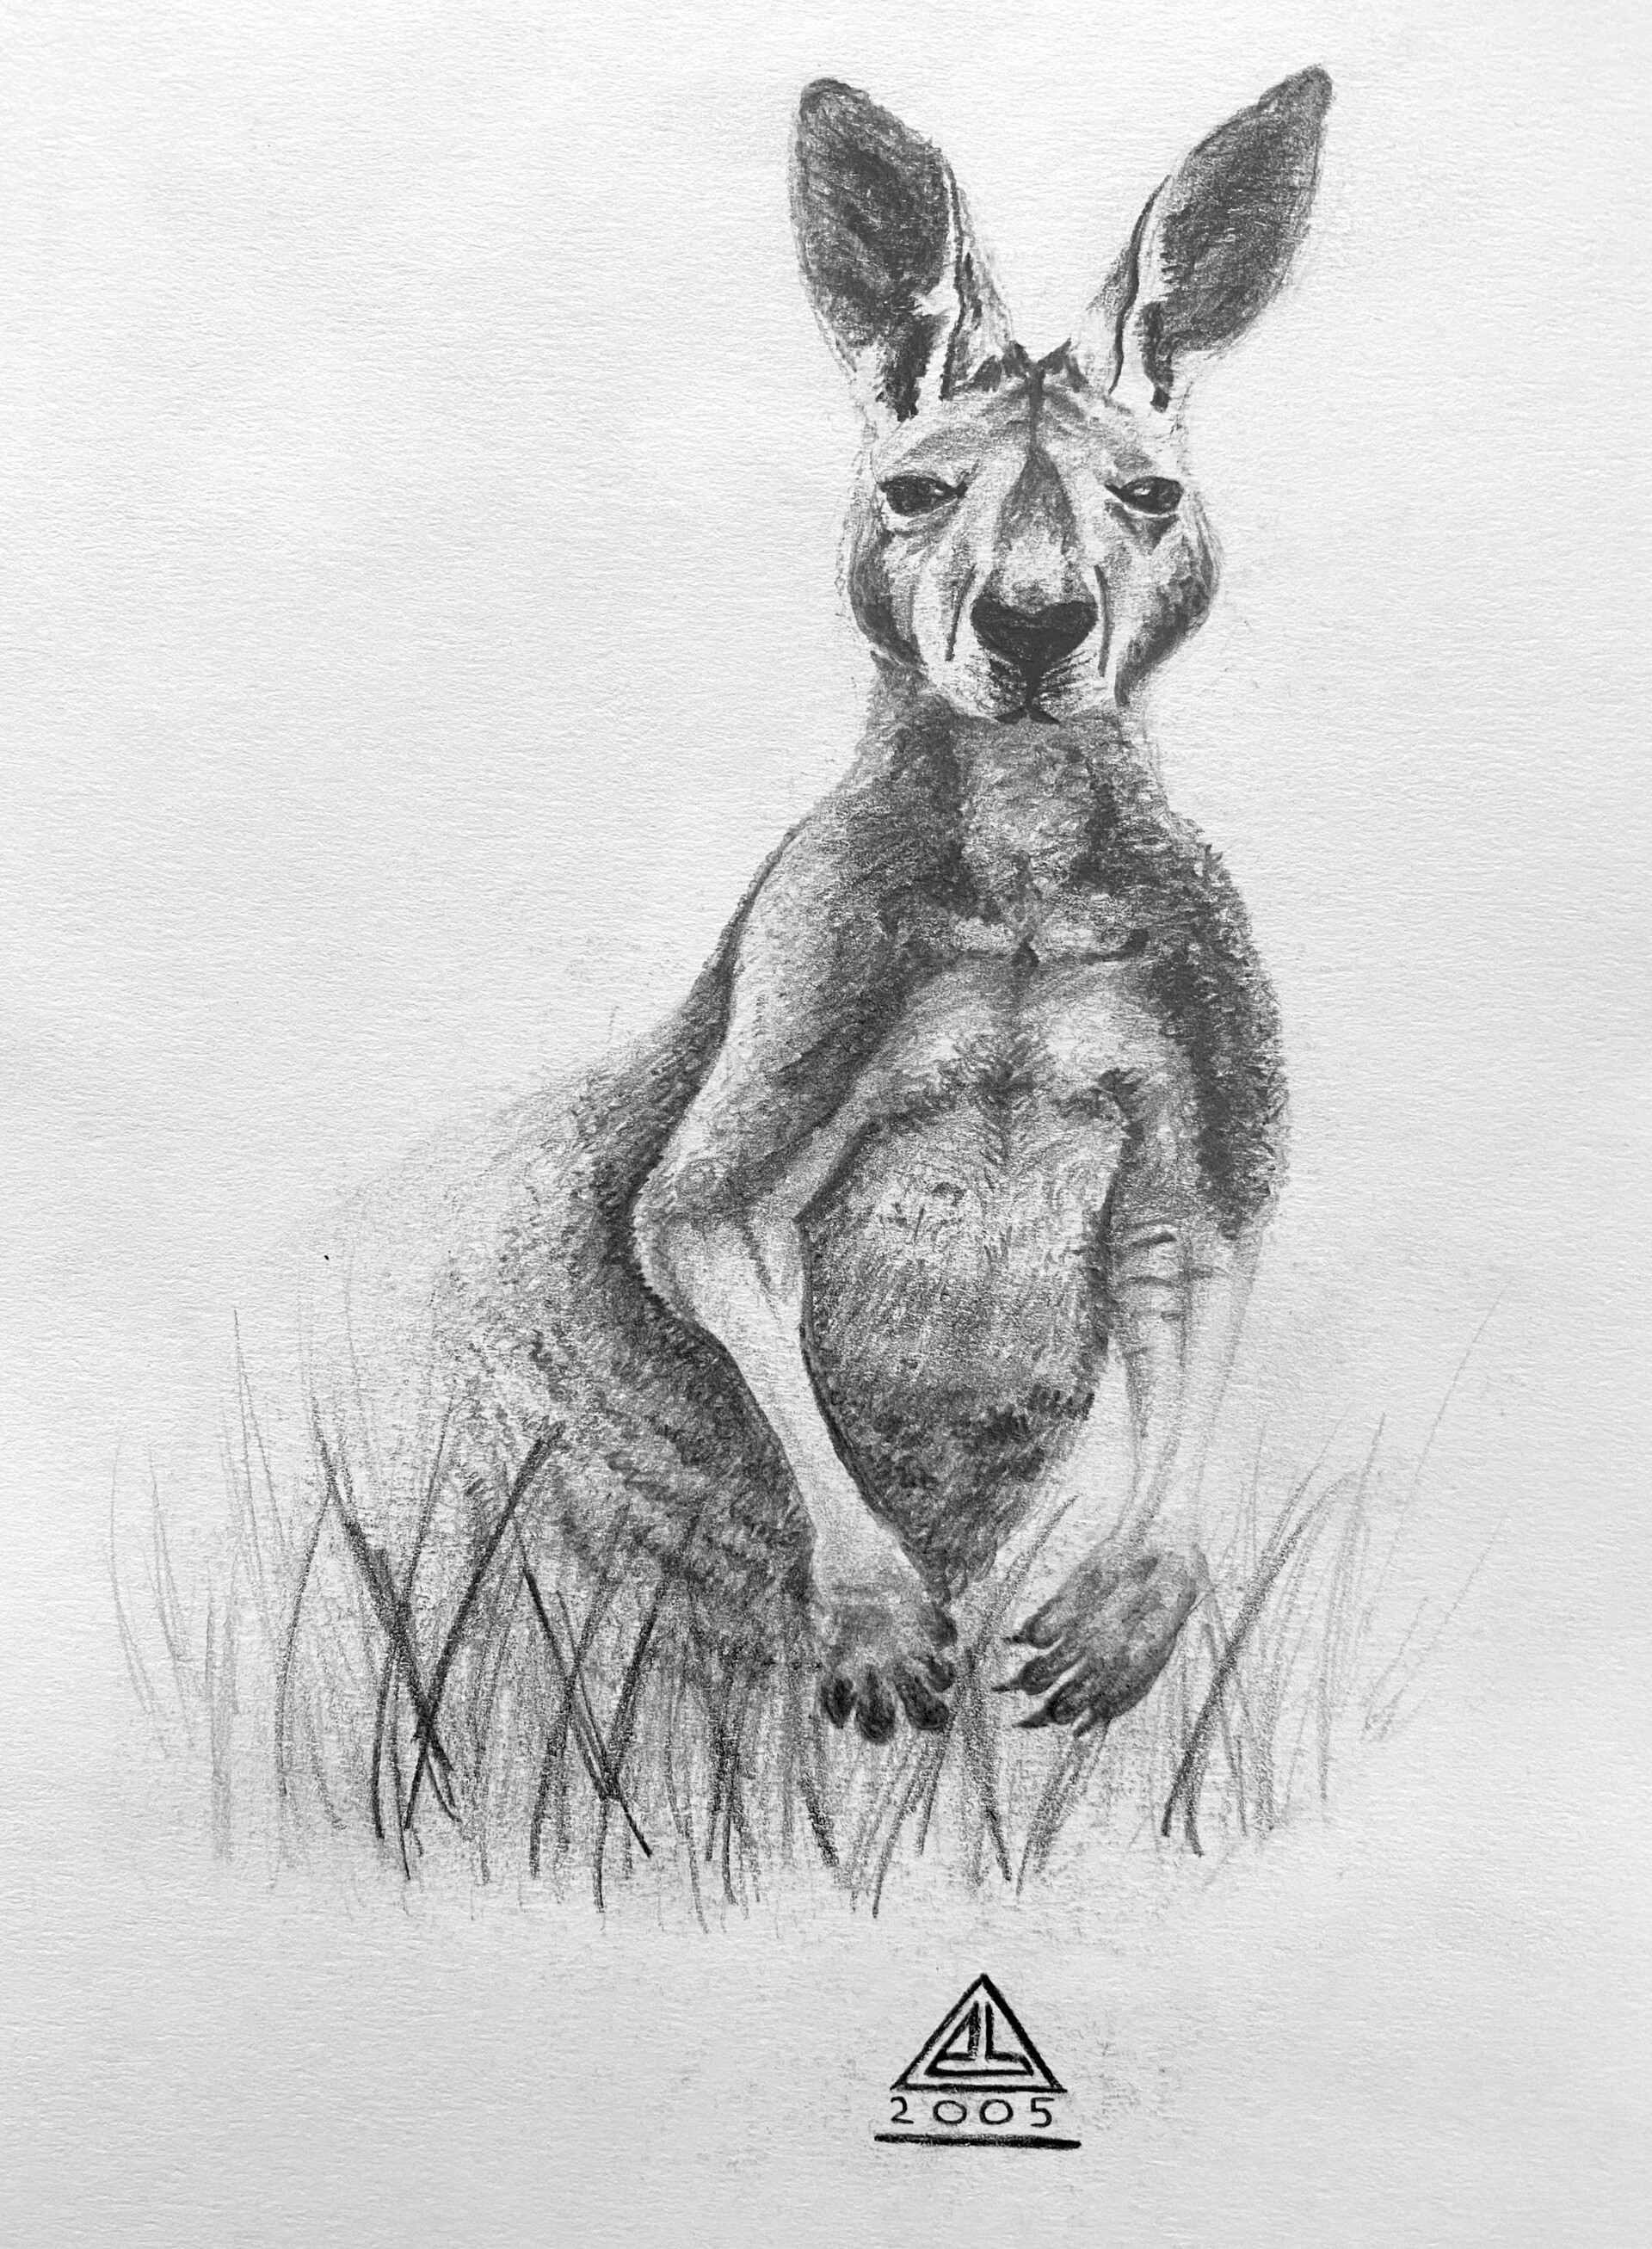 Funny Cute Baby Kangaroo Head Sketch Stock Vector Royalty Free 615976595   Shutterstock